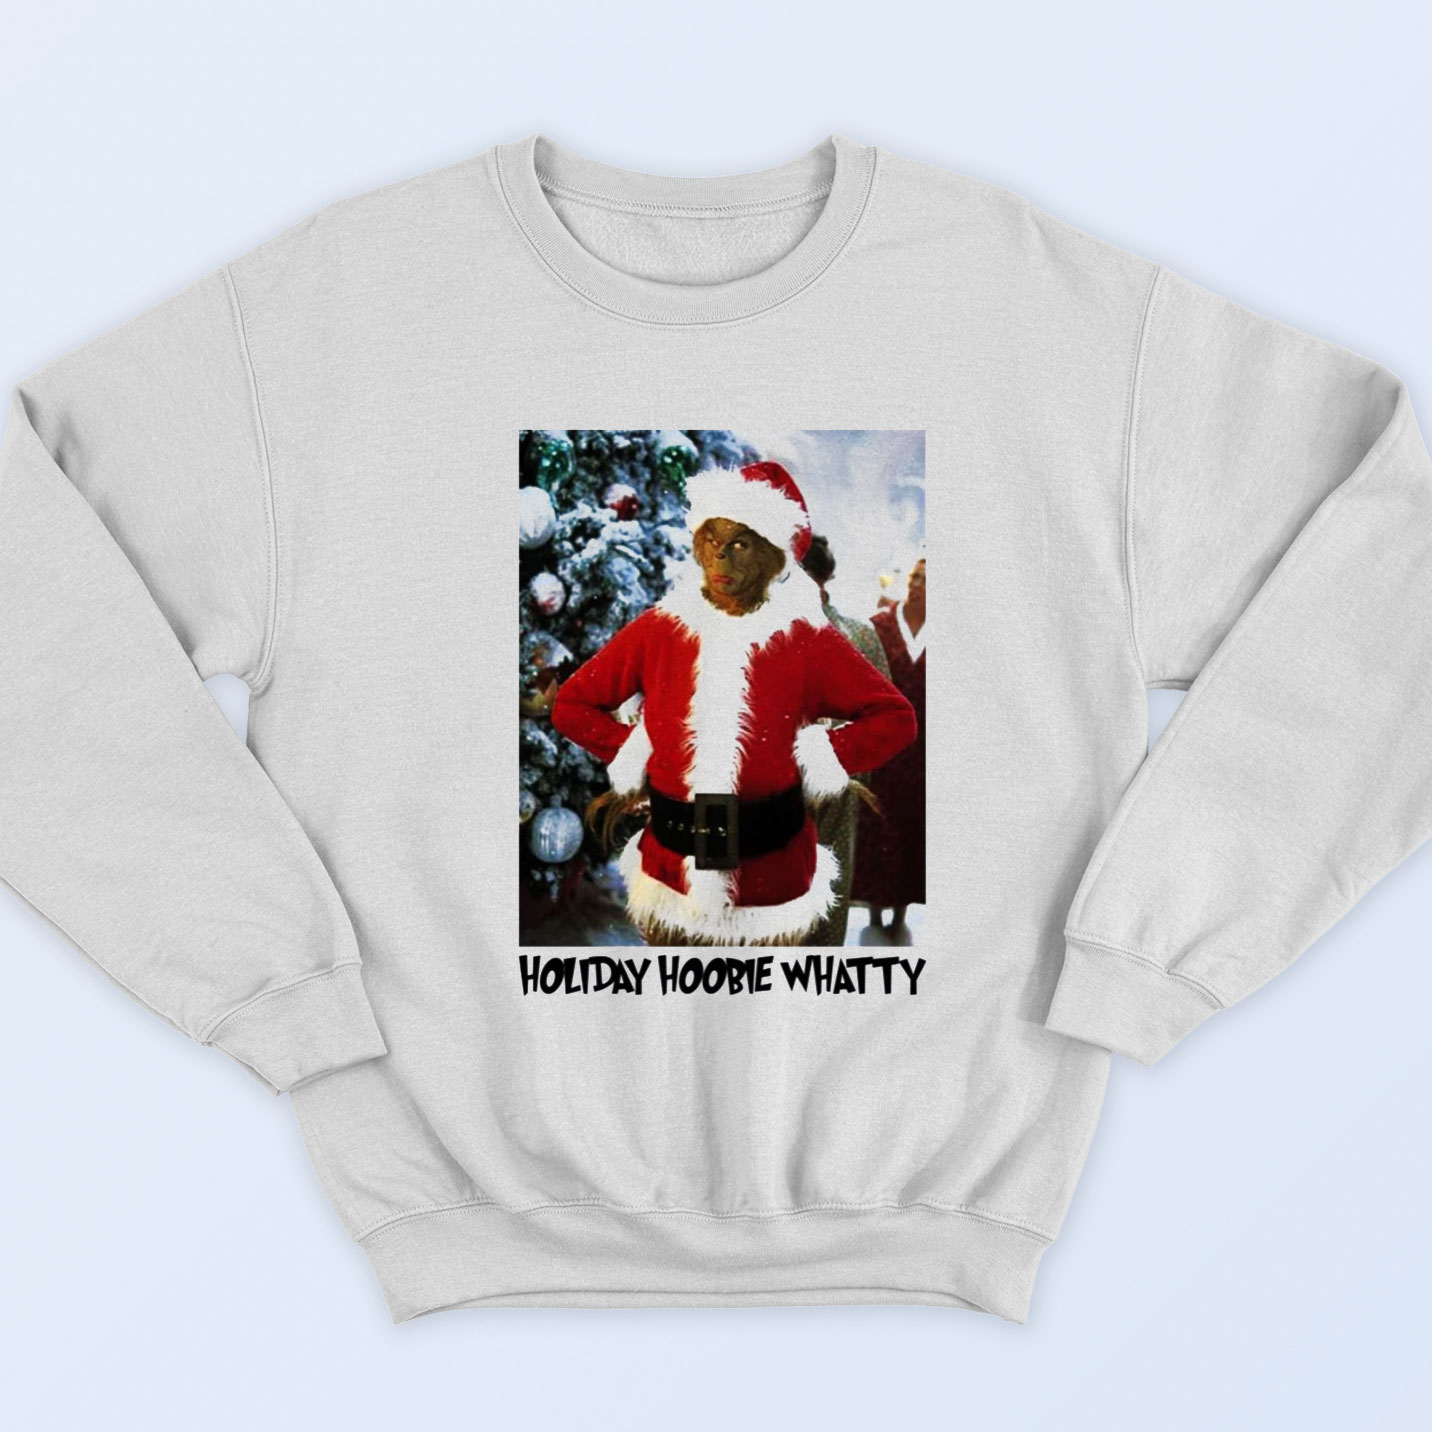 Holiday Hoobie Whatty Sweatshirt - 90sclothes.com